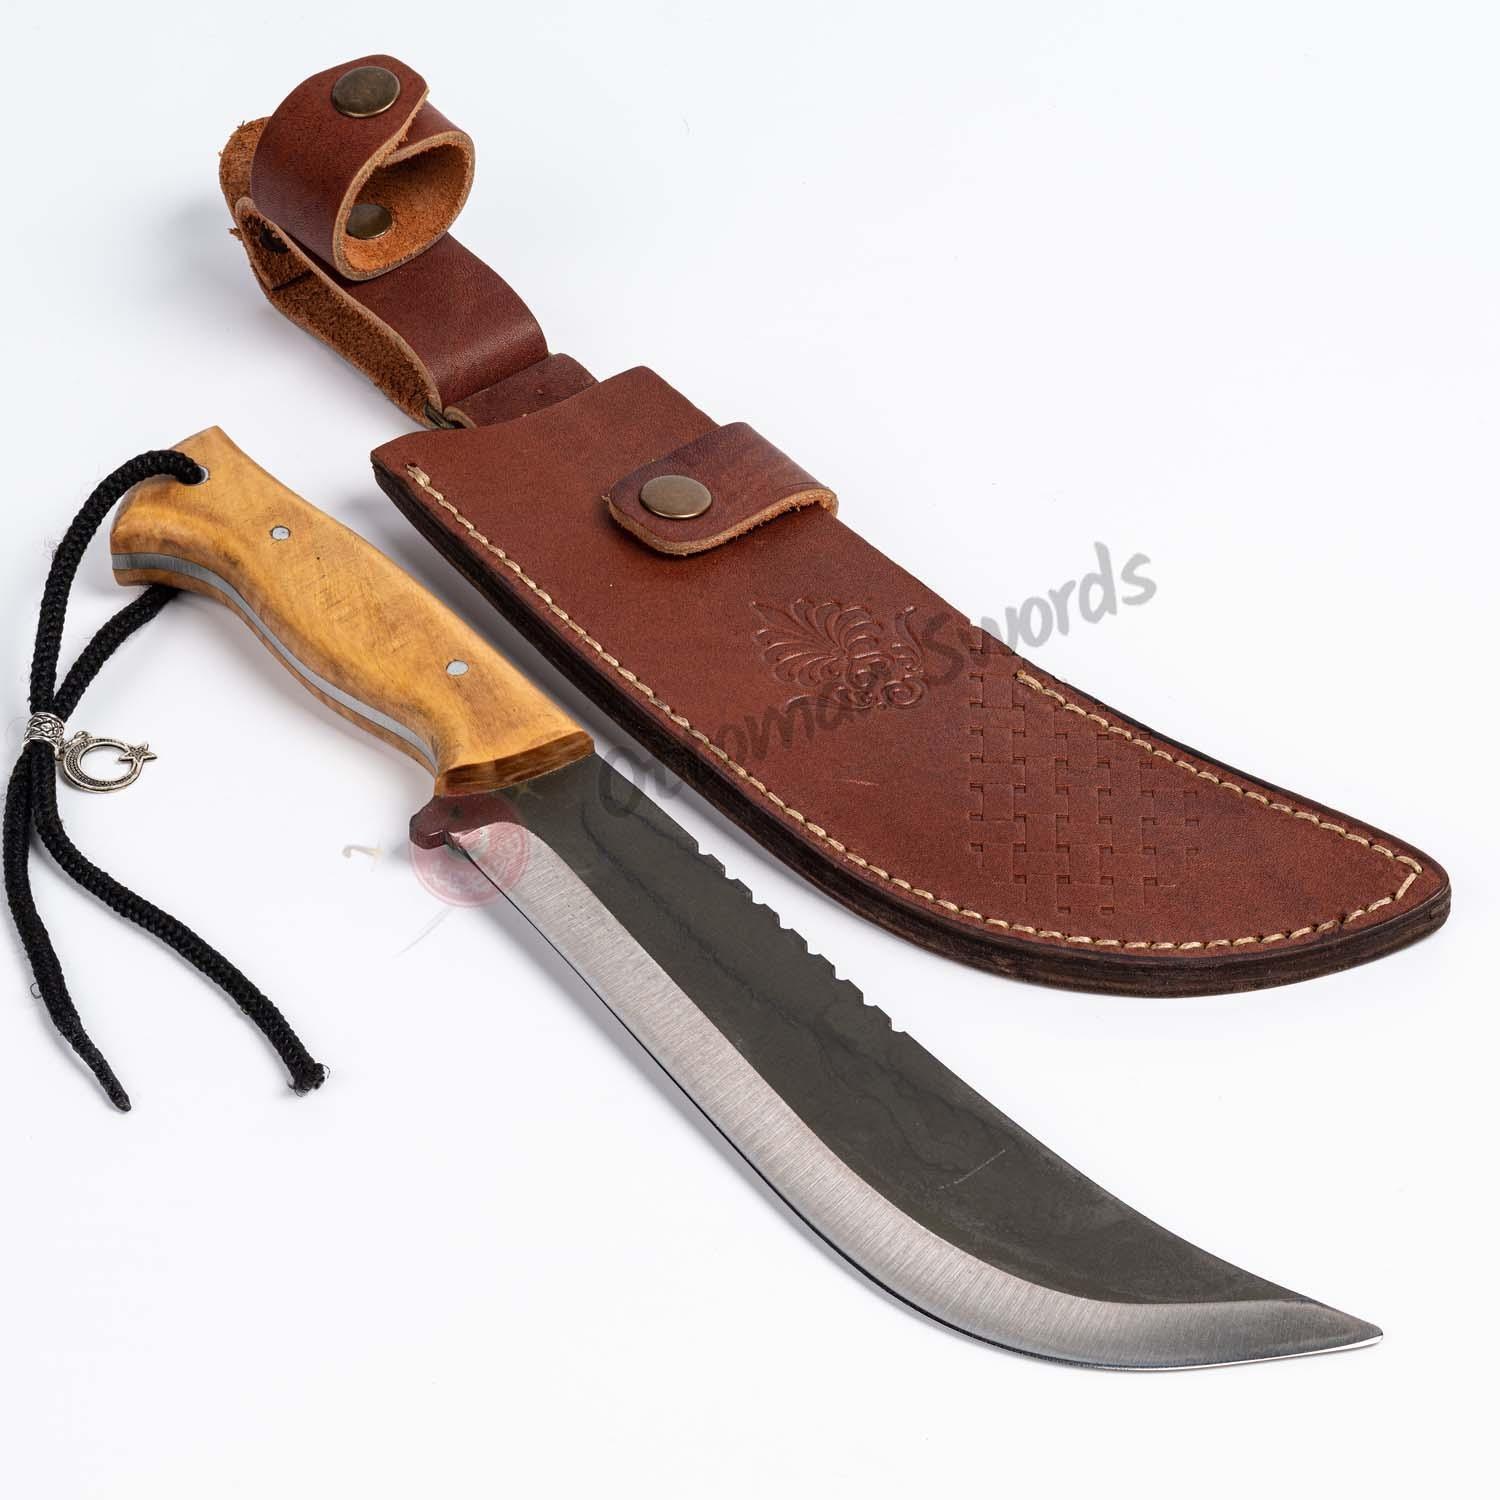 Wooden Handle Machete Knife (1)